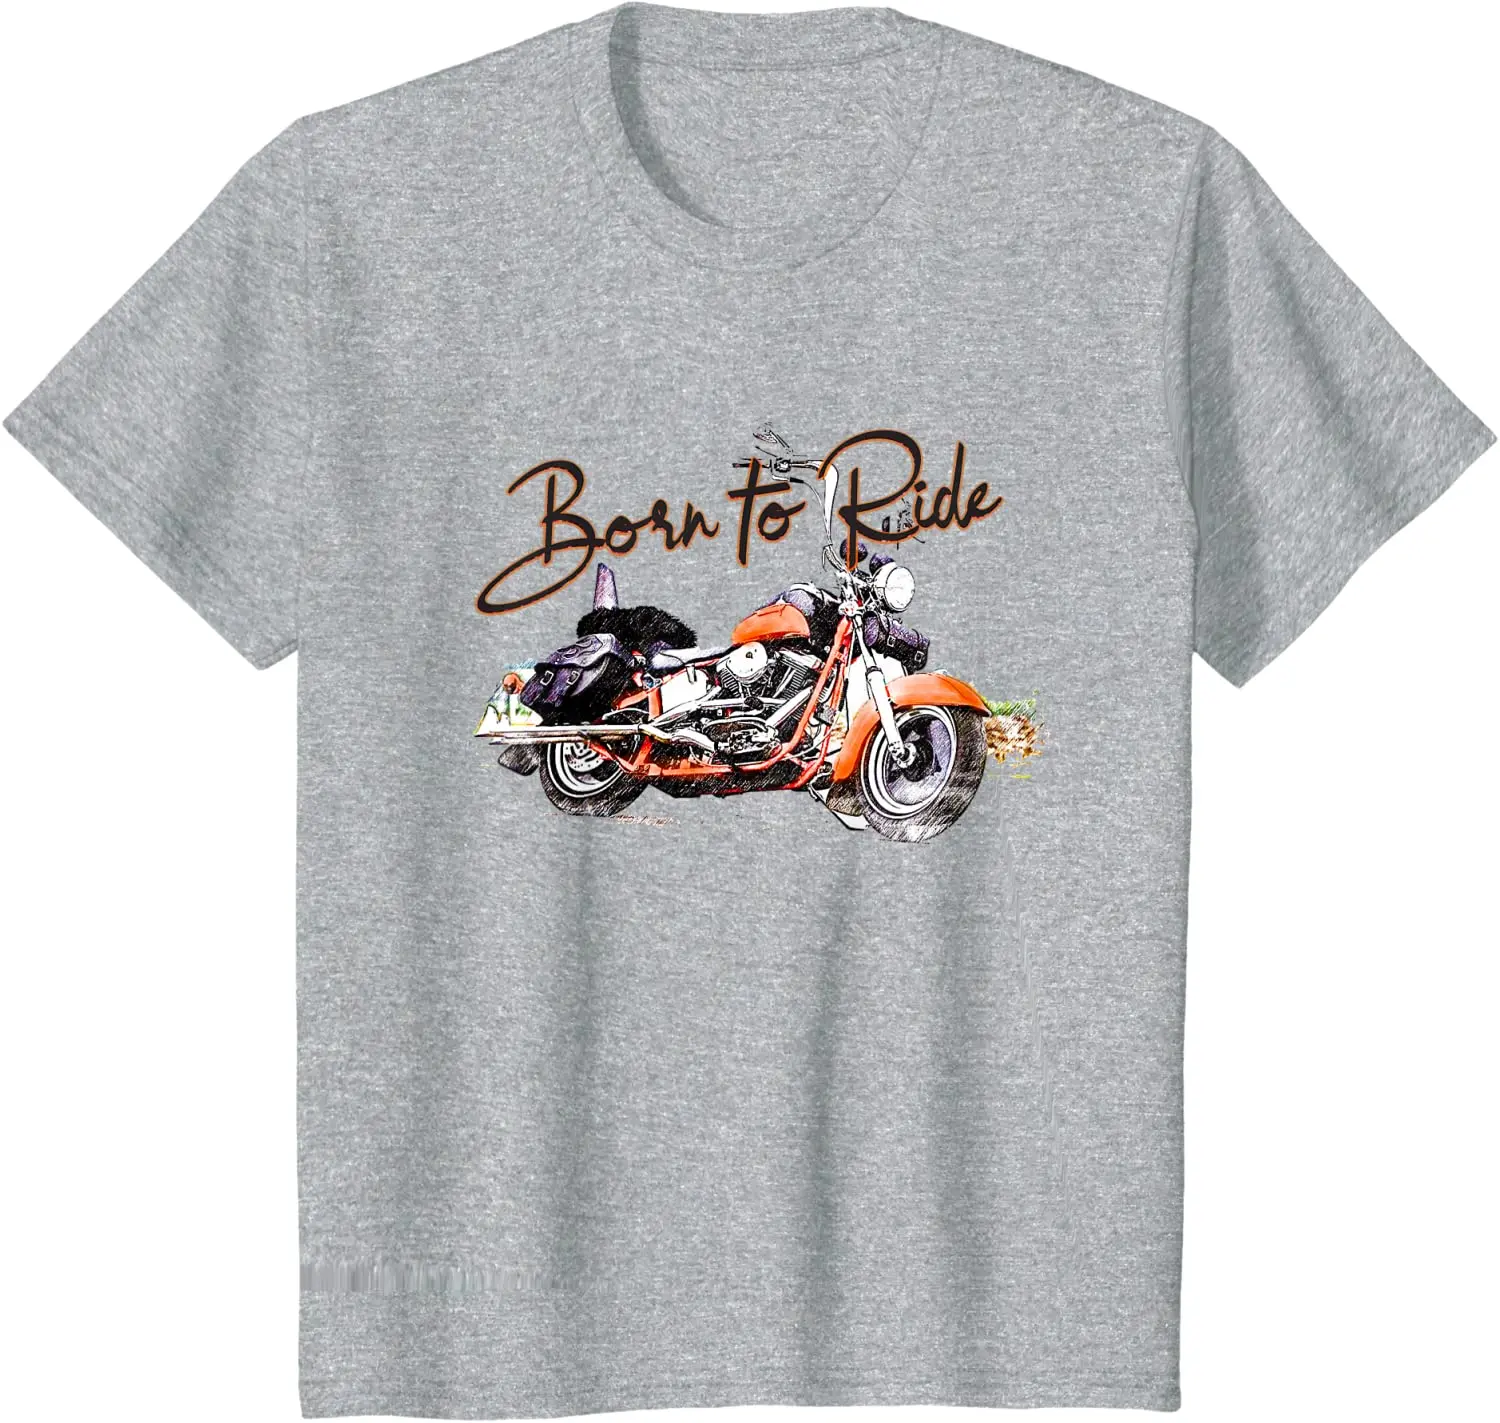 

Born To Ride. Respect The Moto Bikers Chopper Motorcycle T-Shirt. Summer Cotton Short Sleeve O-Neck Mens T Shirt New S-3XL